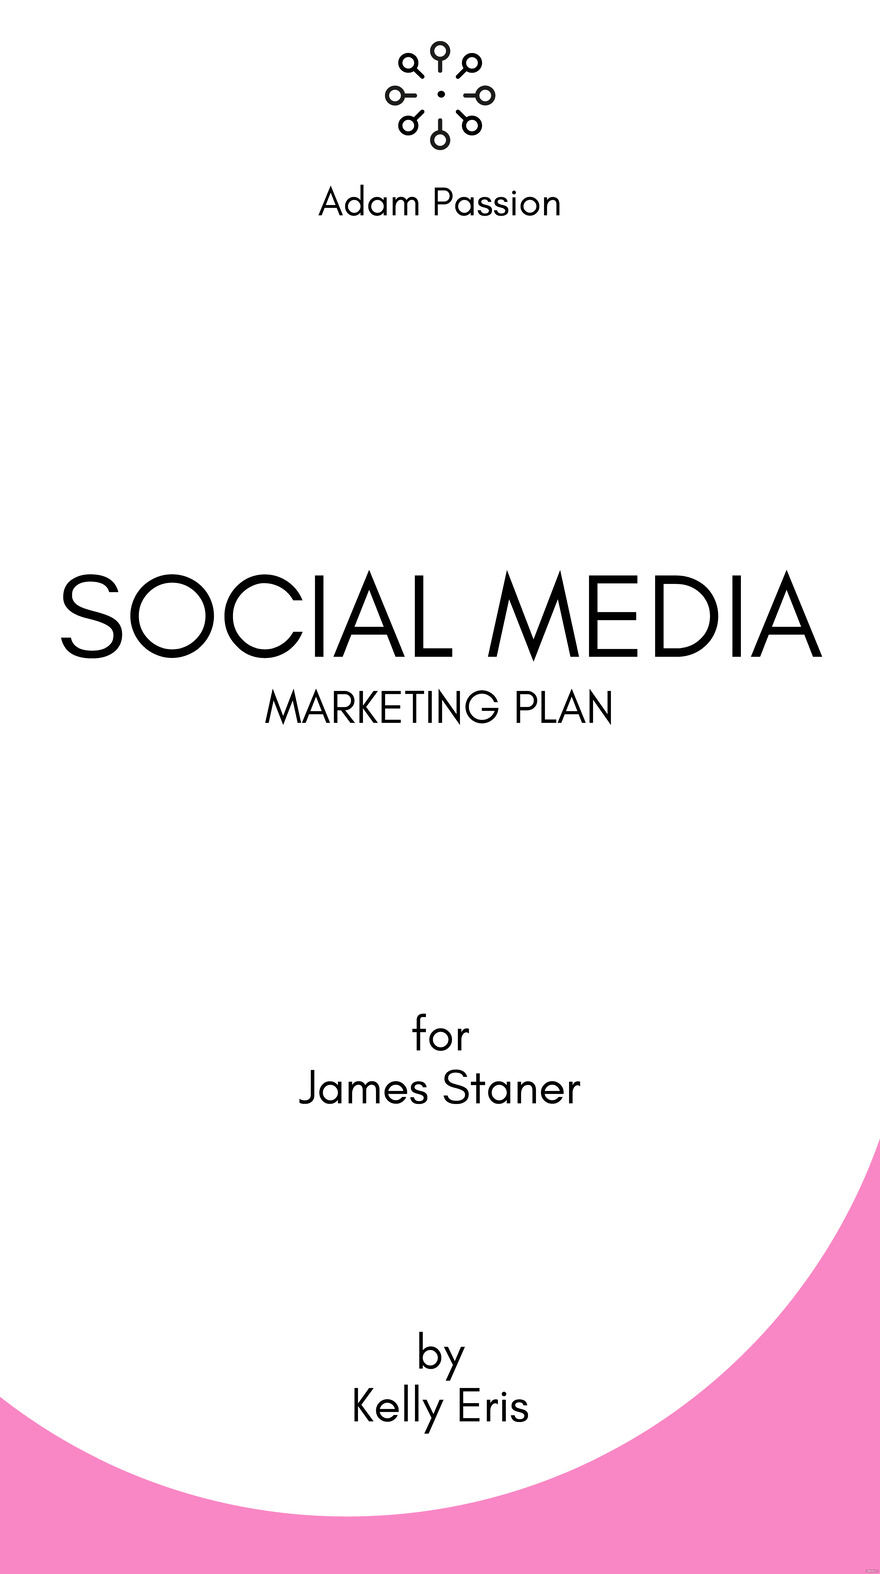 social media marketing mobile presentation ideas and examples